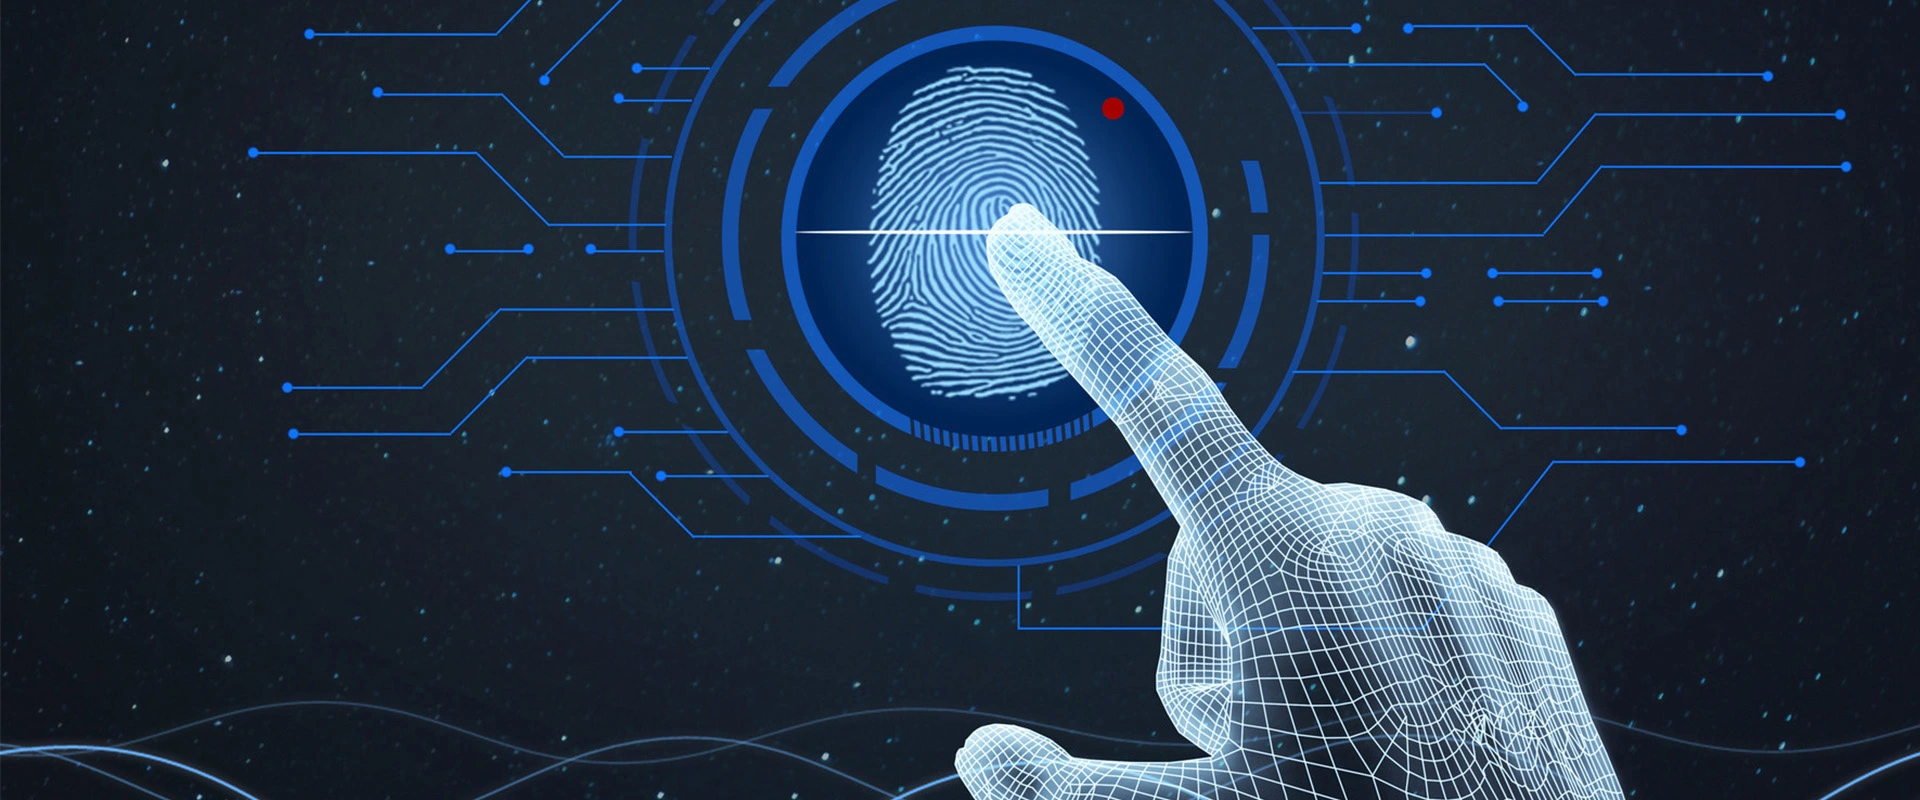 STQC Certified Fingerprint Scanner Introduction